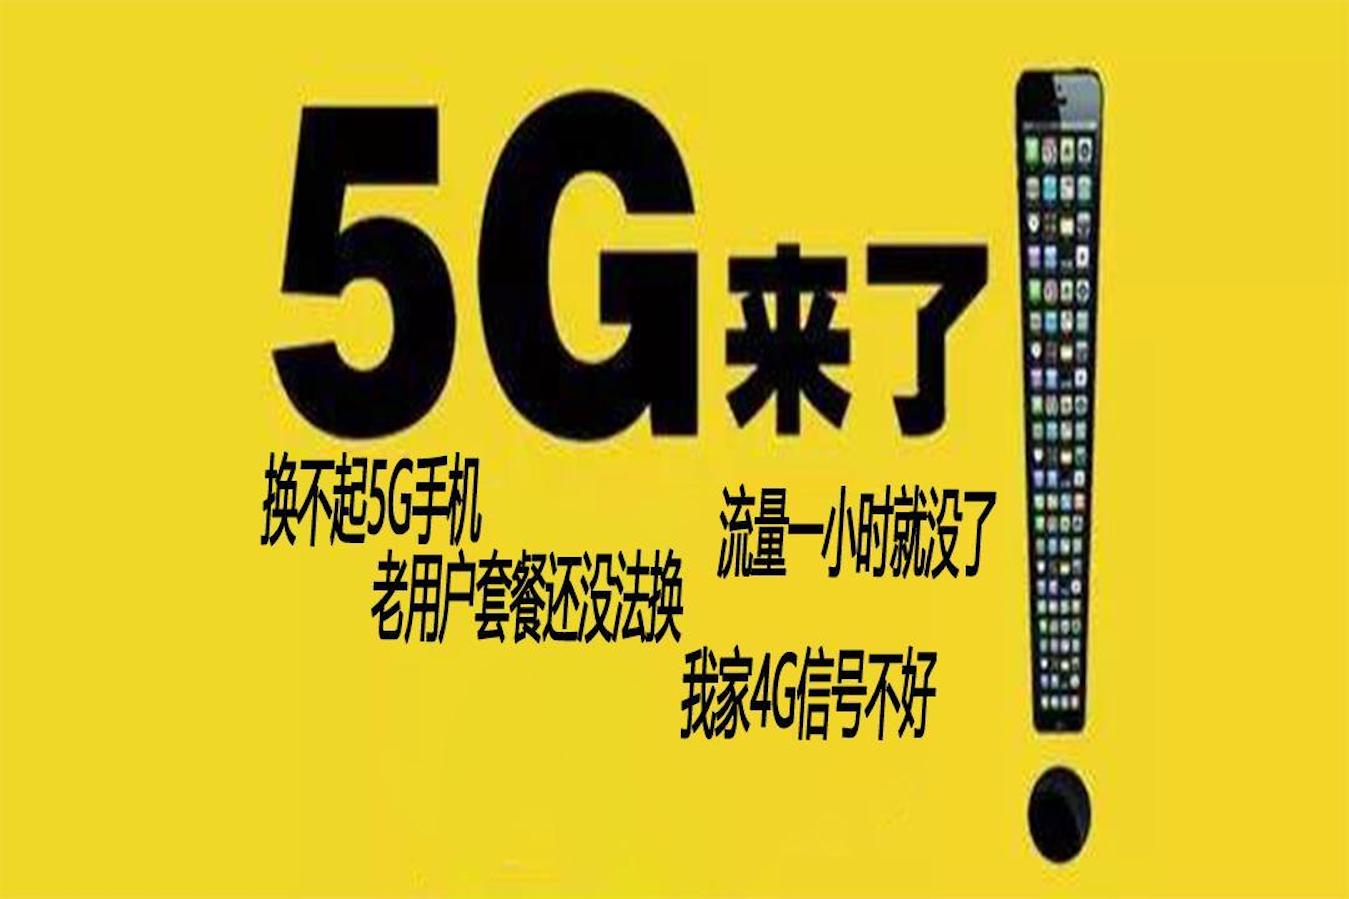 4G 无故转 5G 引困惑，技术解读其背后原因及影响  第2张